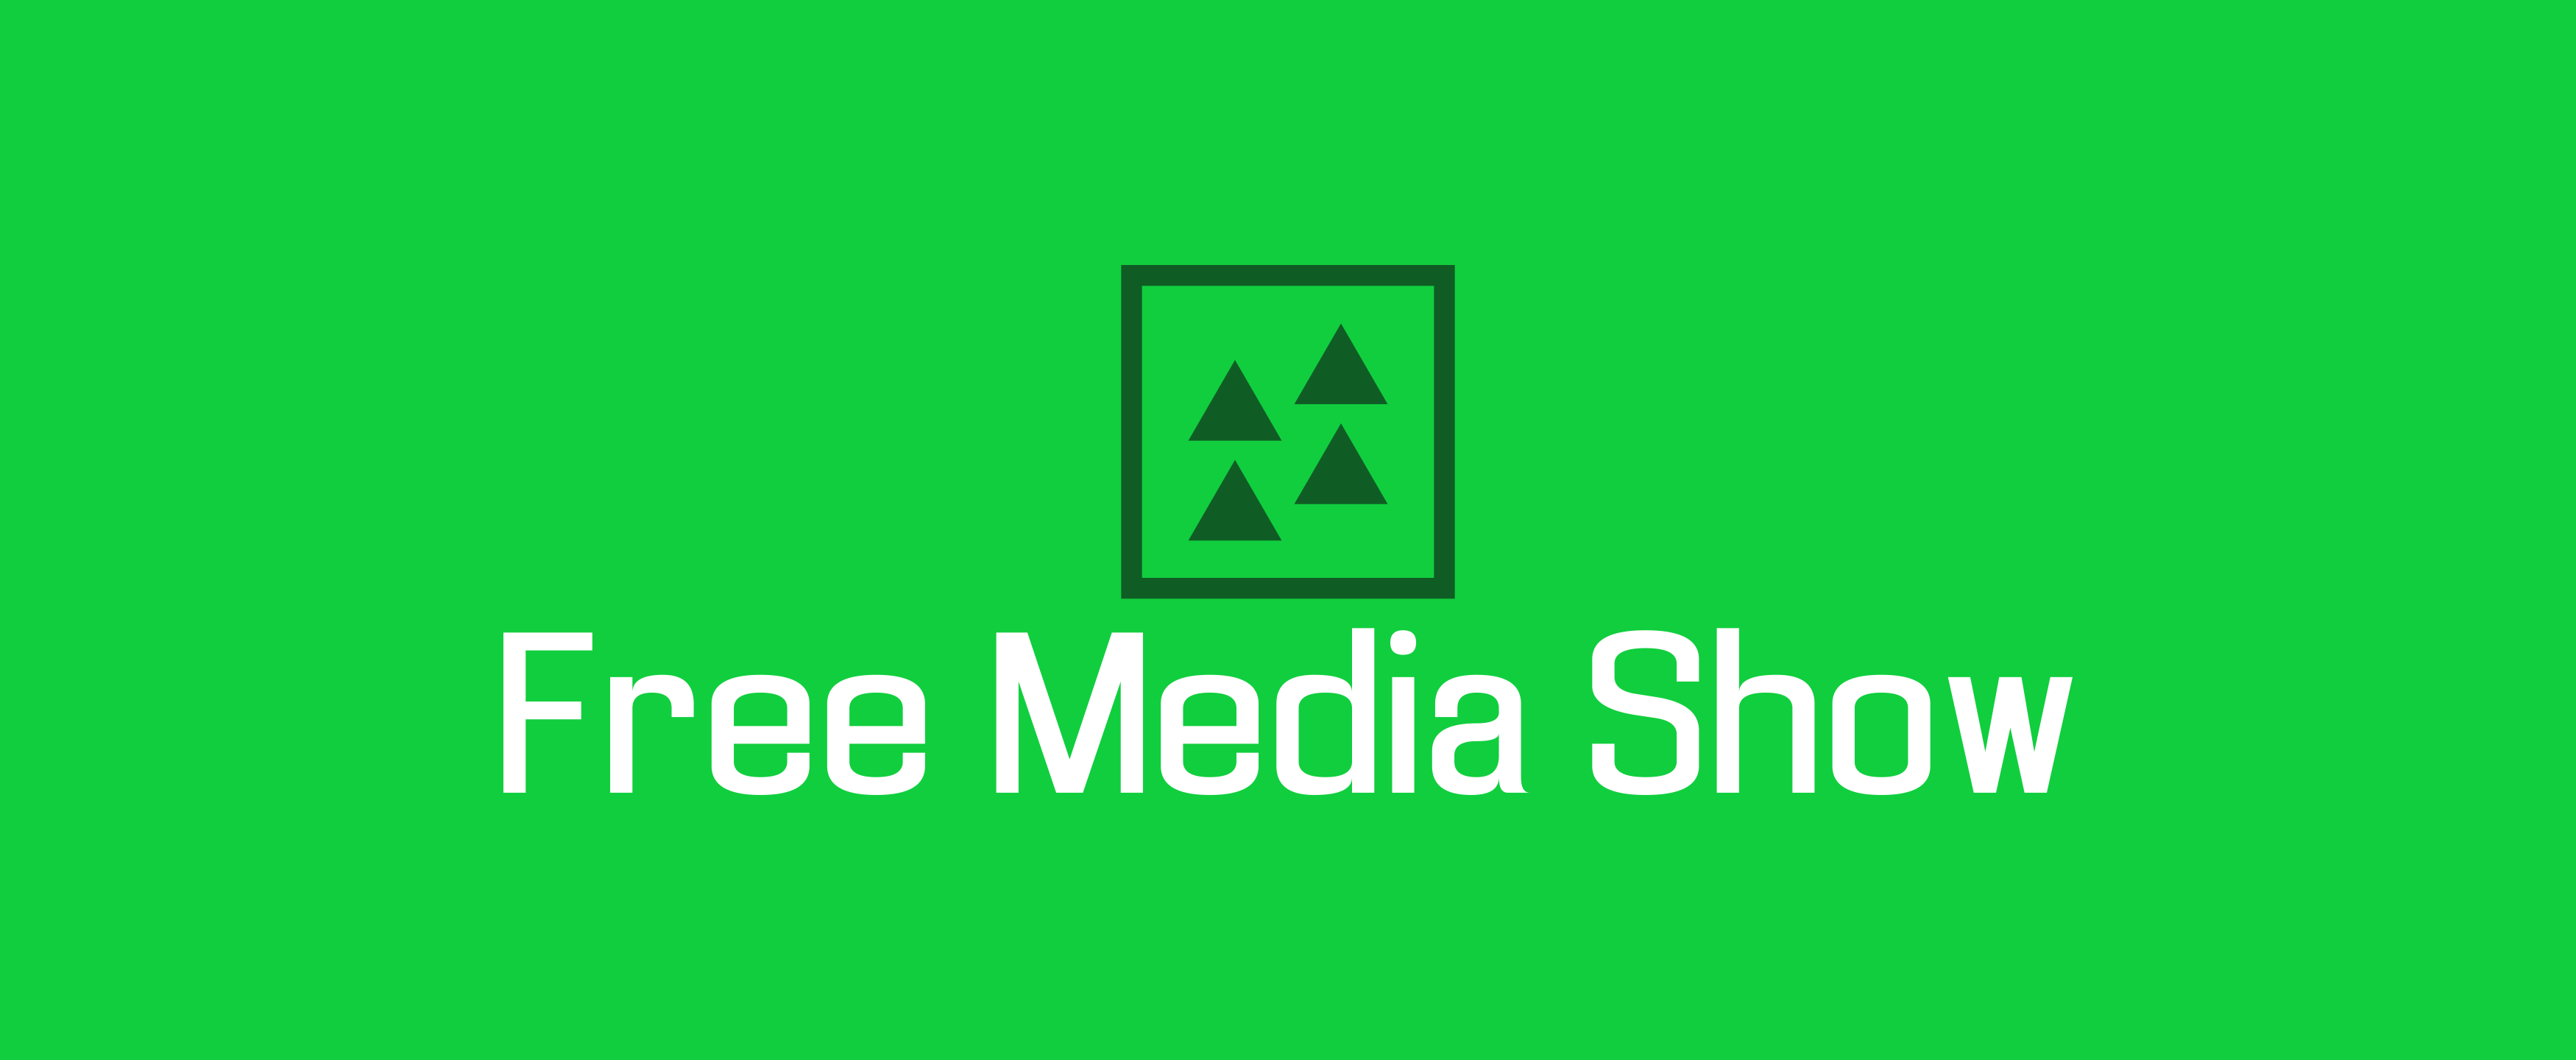 Free Media Show